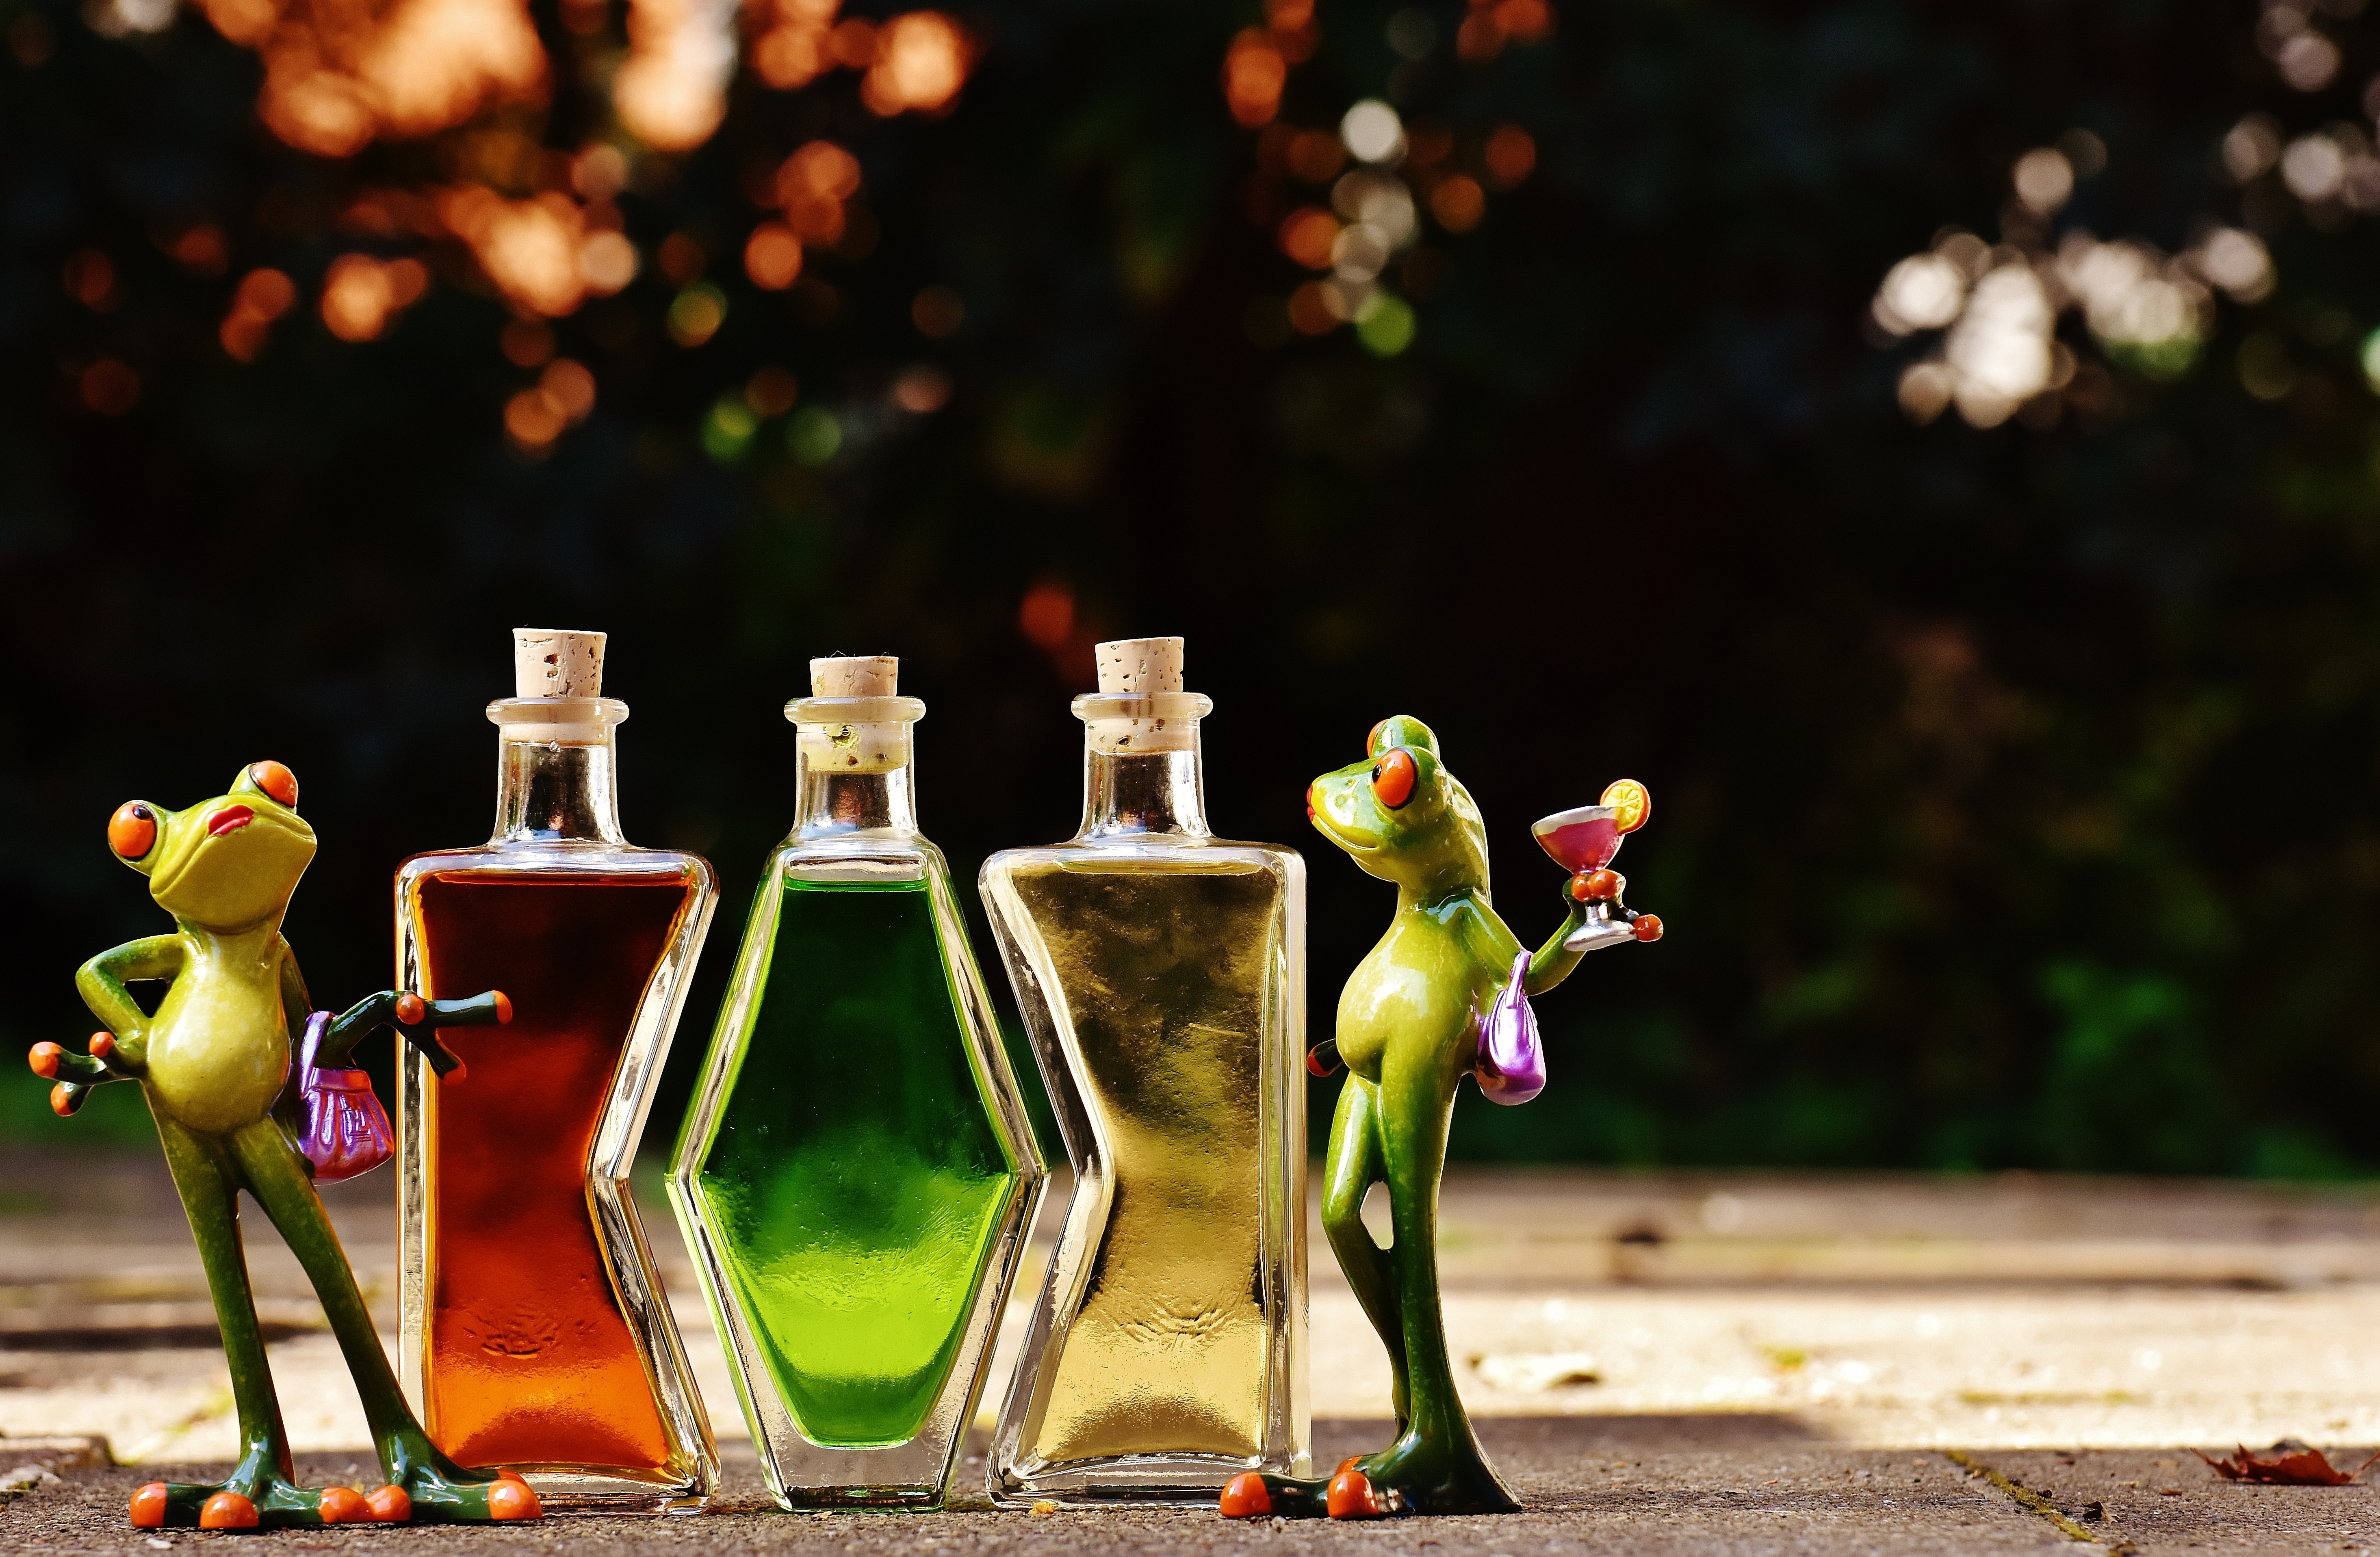 3 clear glass perfume bottles